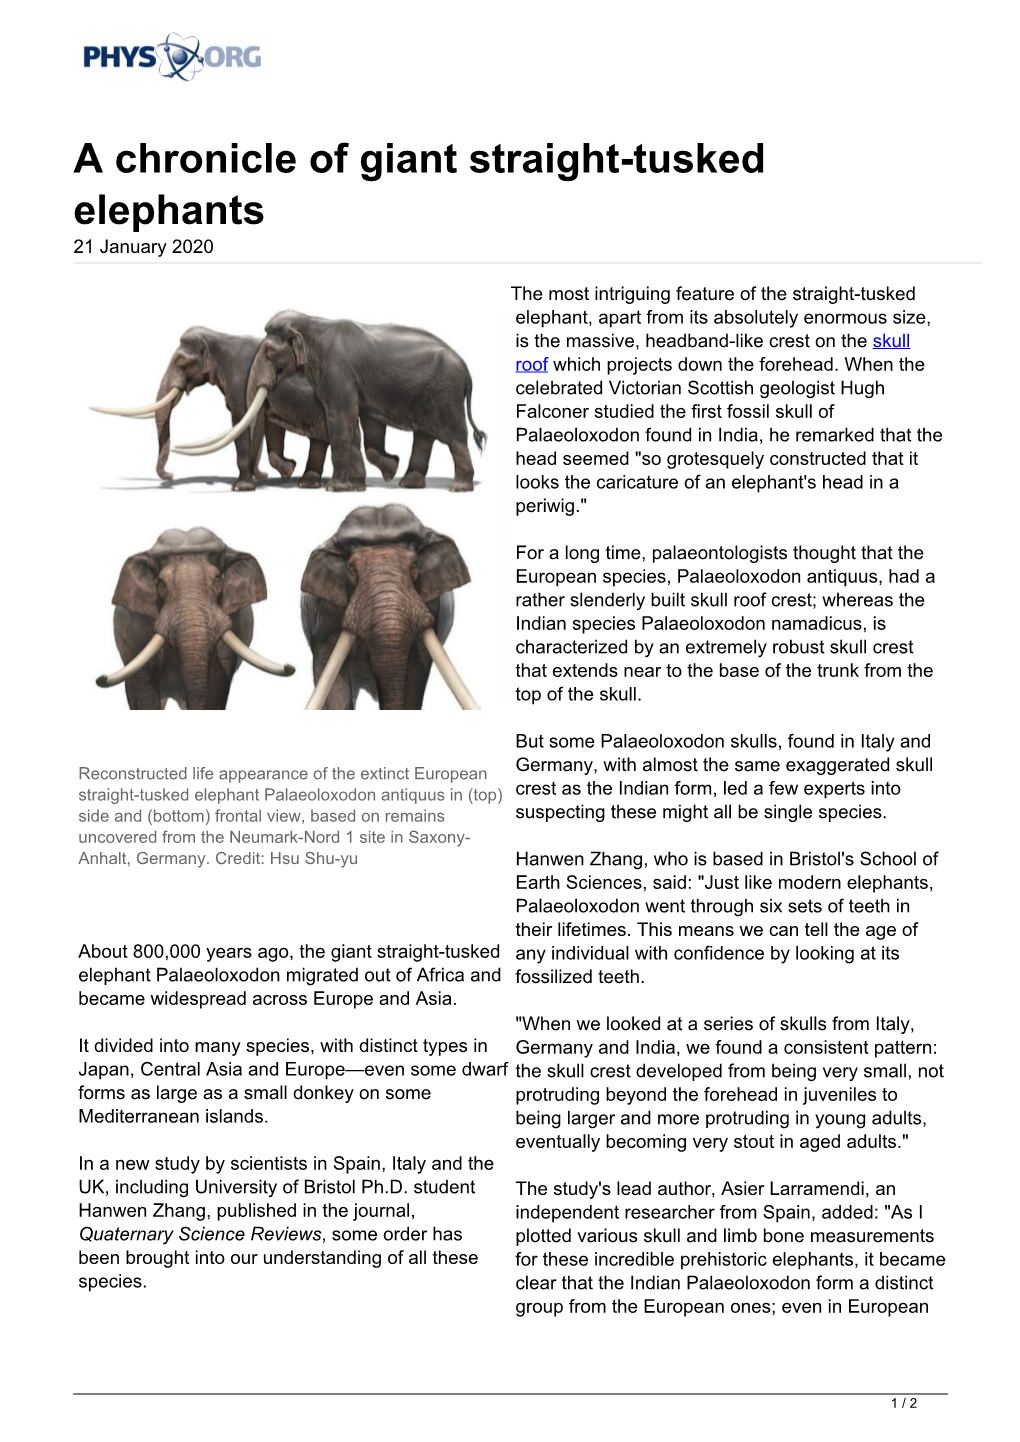 A Chronicle of Giant Straight-Tusked Elephants 21 January 2020